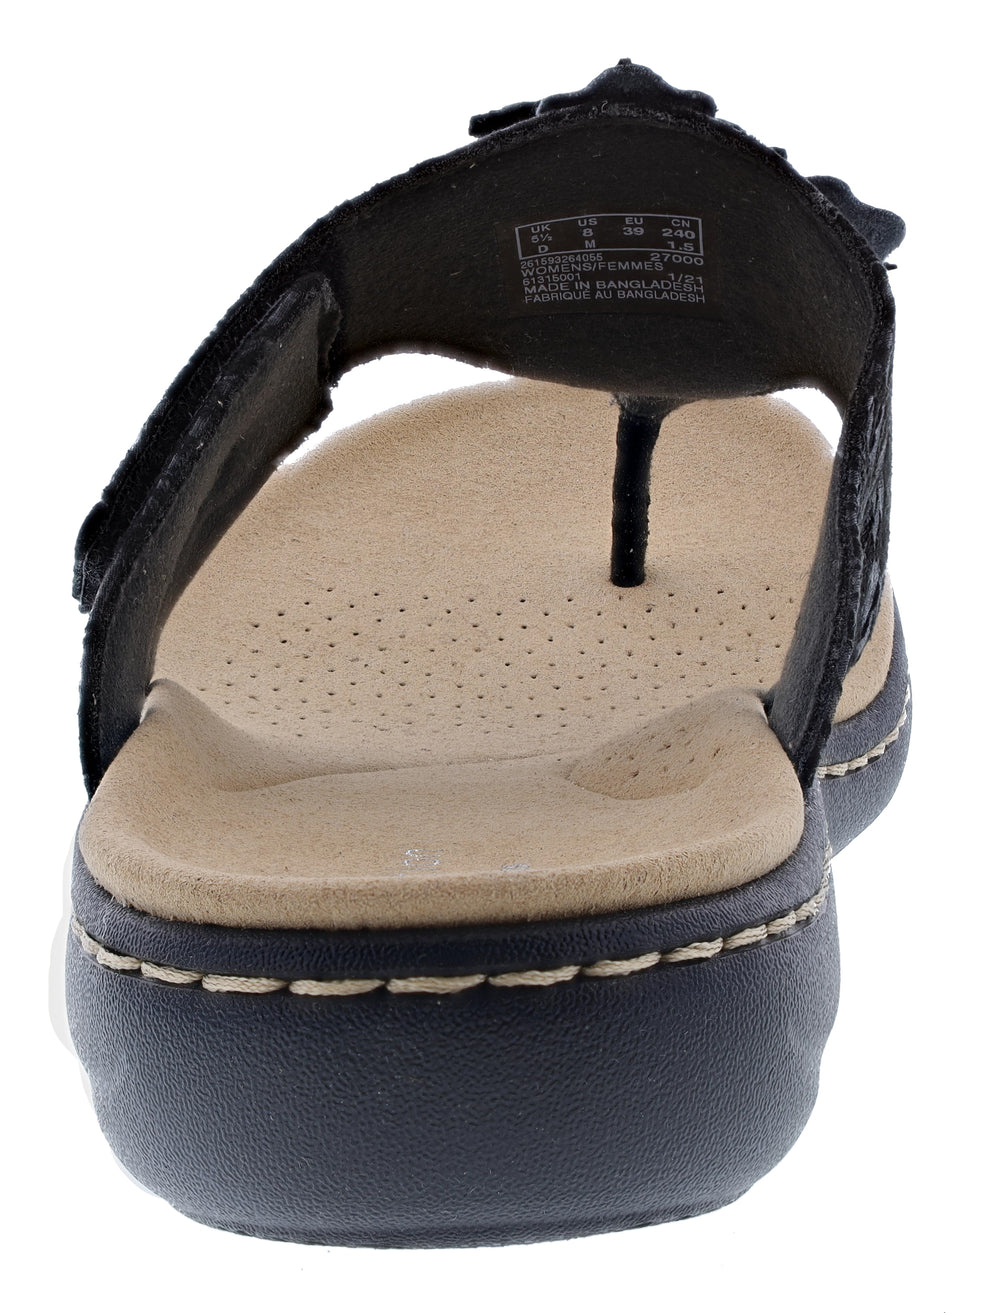 Clarks Laurieann Adjustable Comfort Sandals - Women's | Shoe City